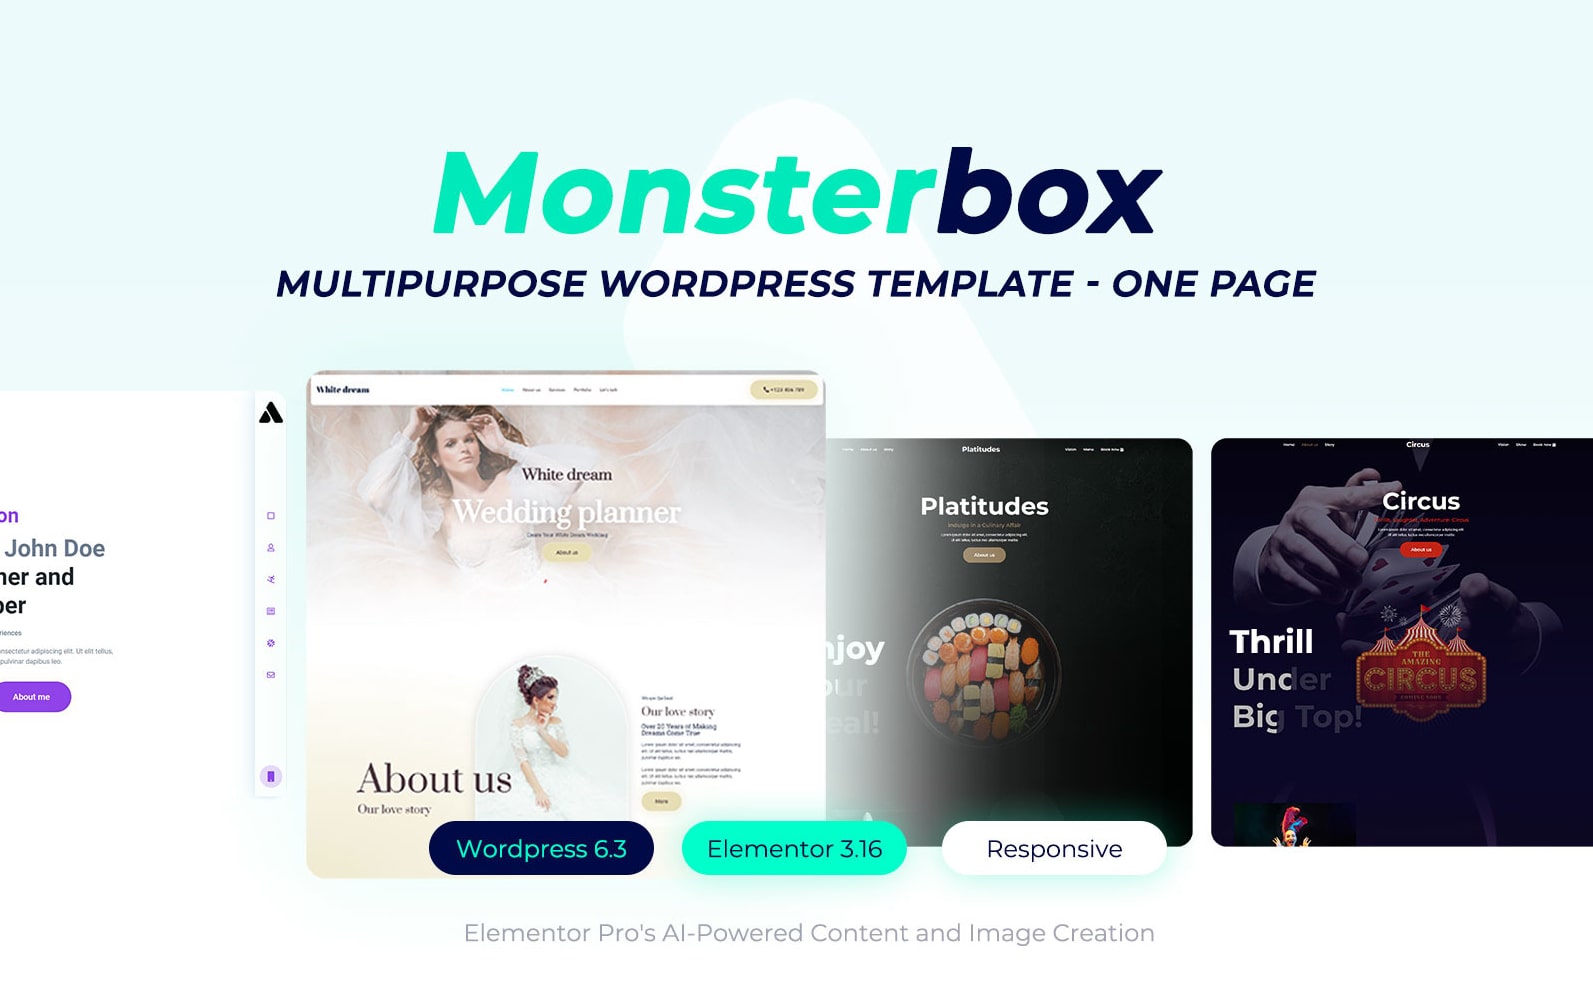 Monster box Black Friday Sale - Buy Newest WordPress Templates 50% OFF